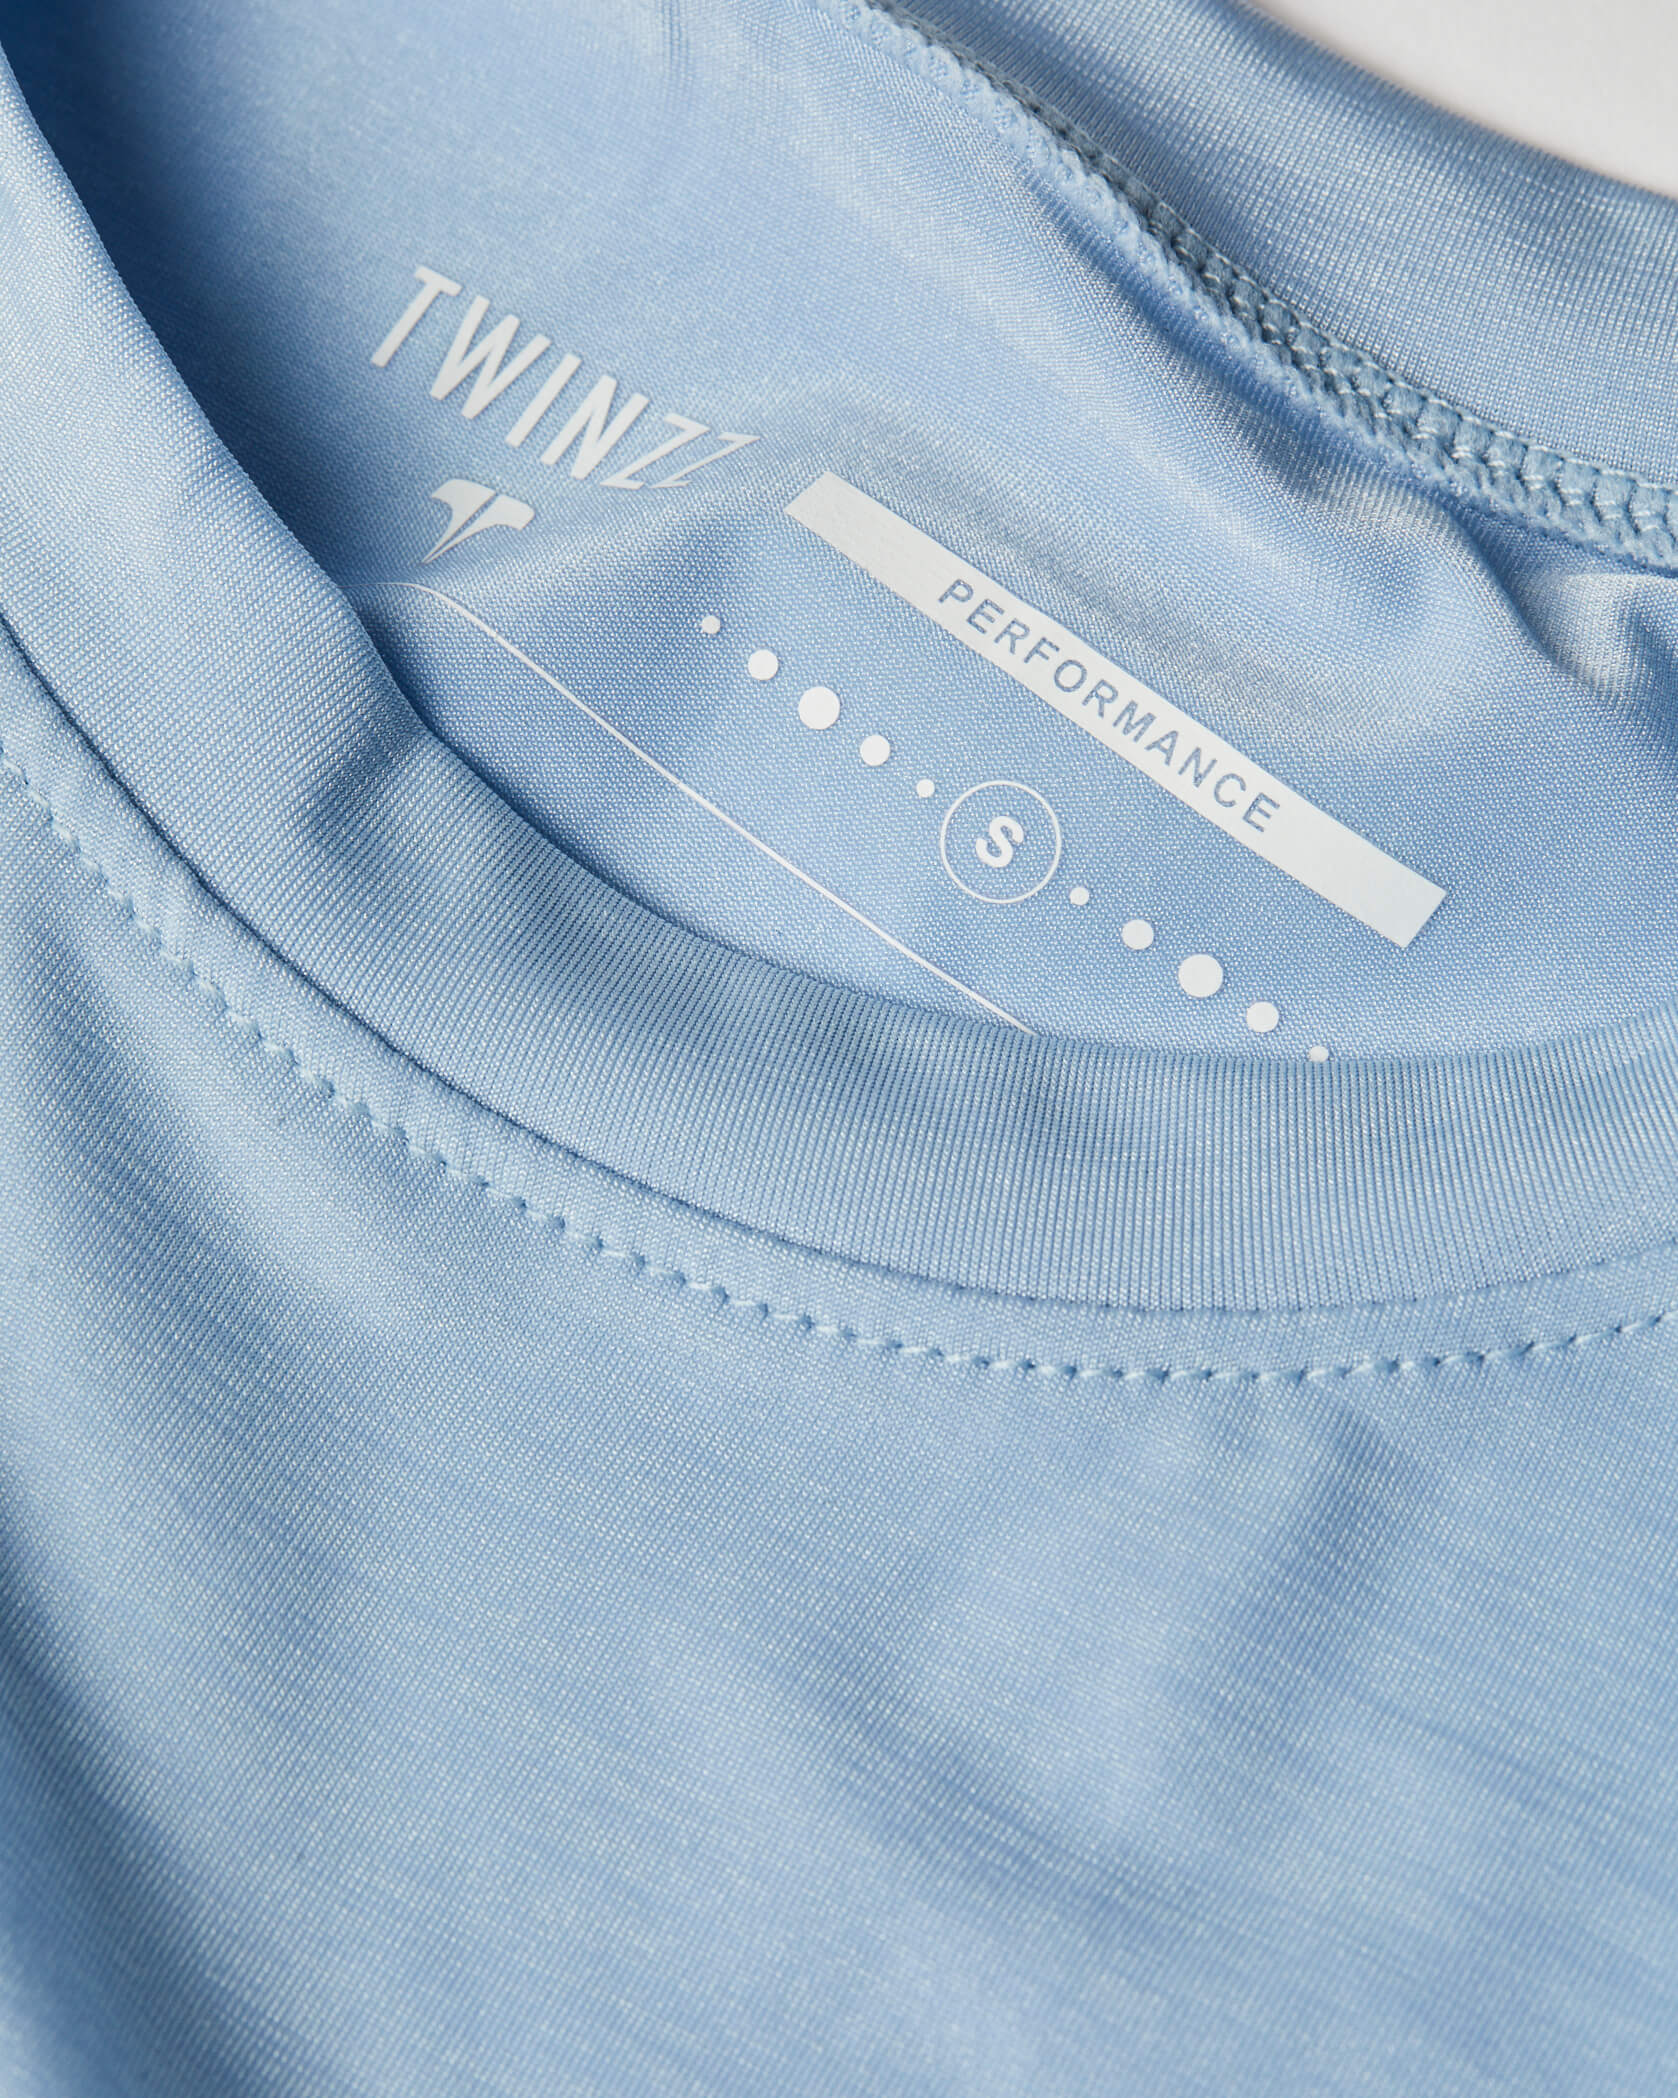 Twinzz active sky blue t-shirt label